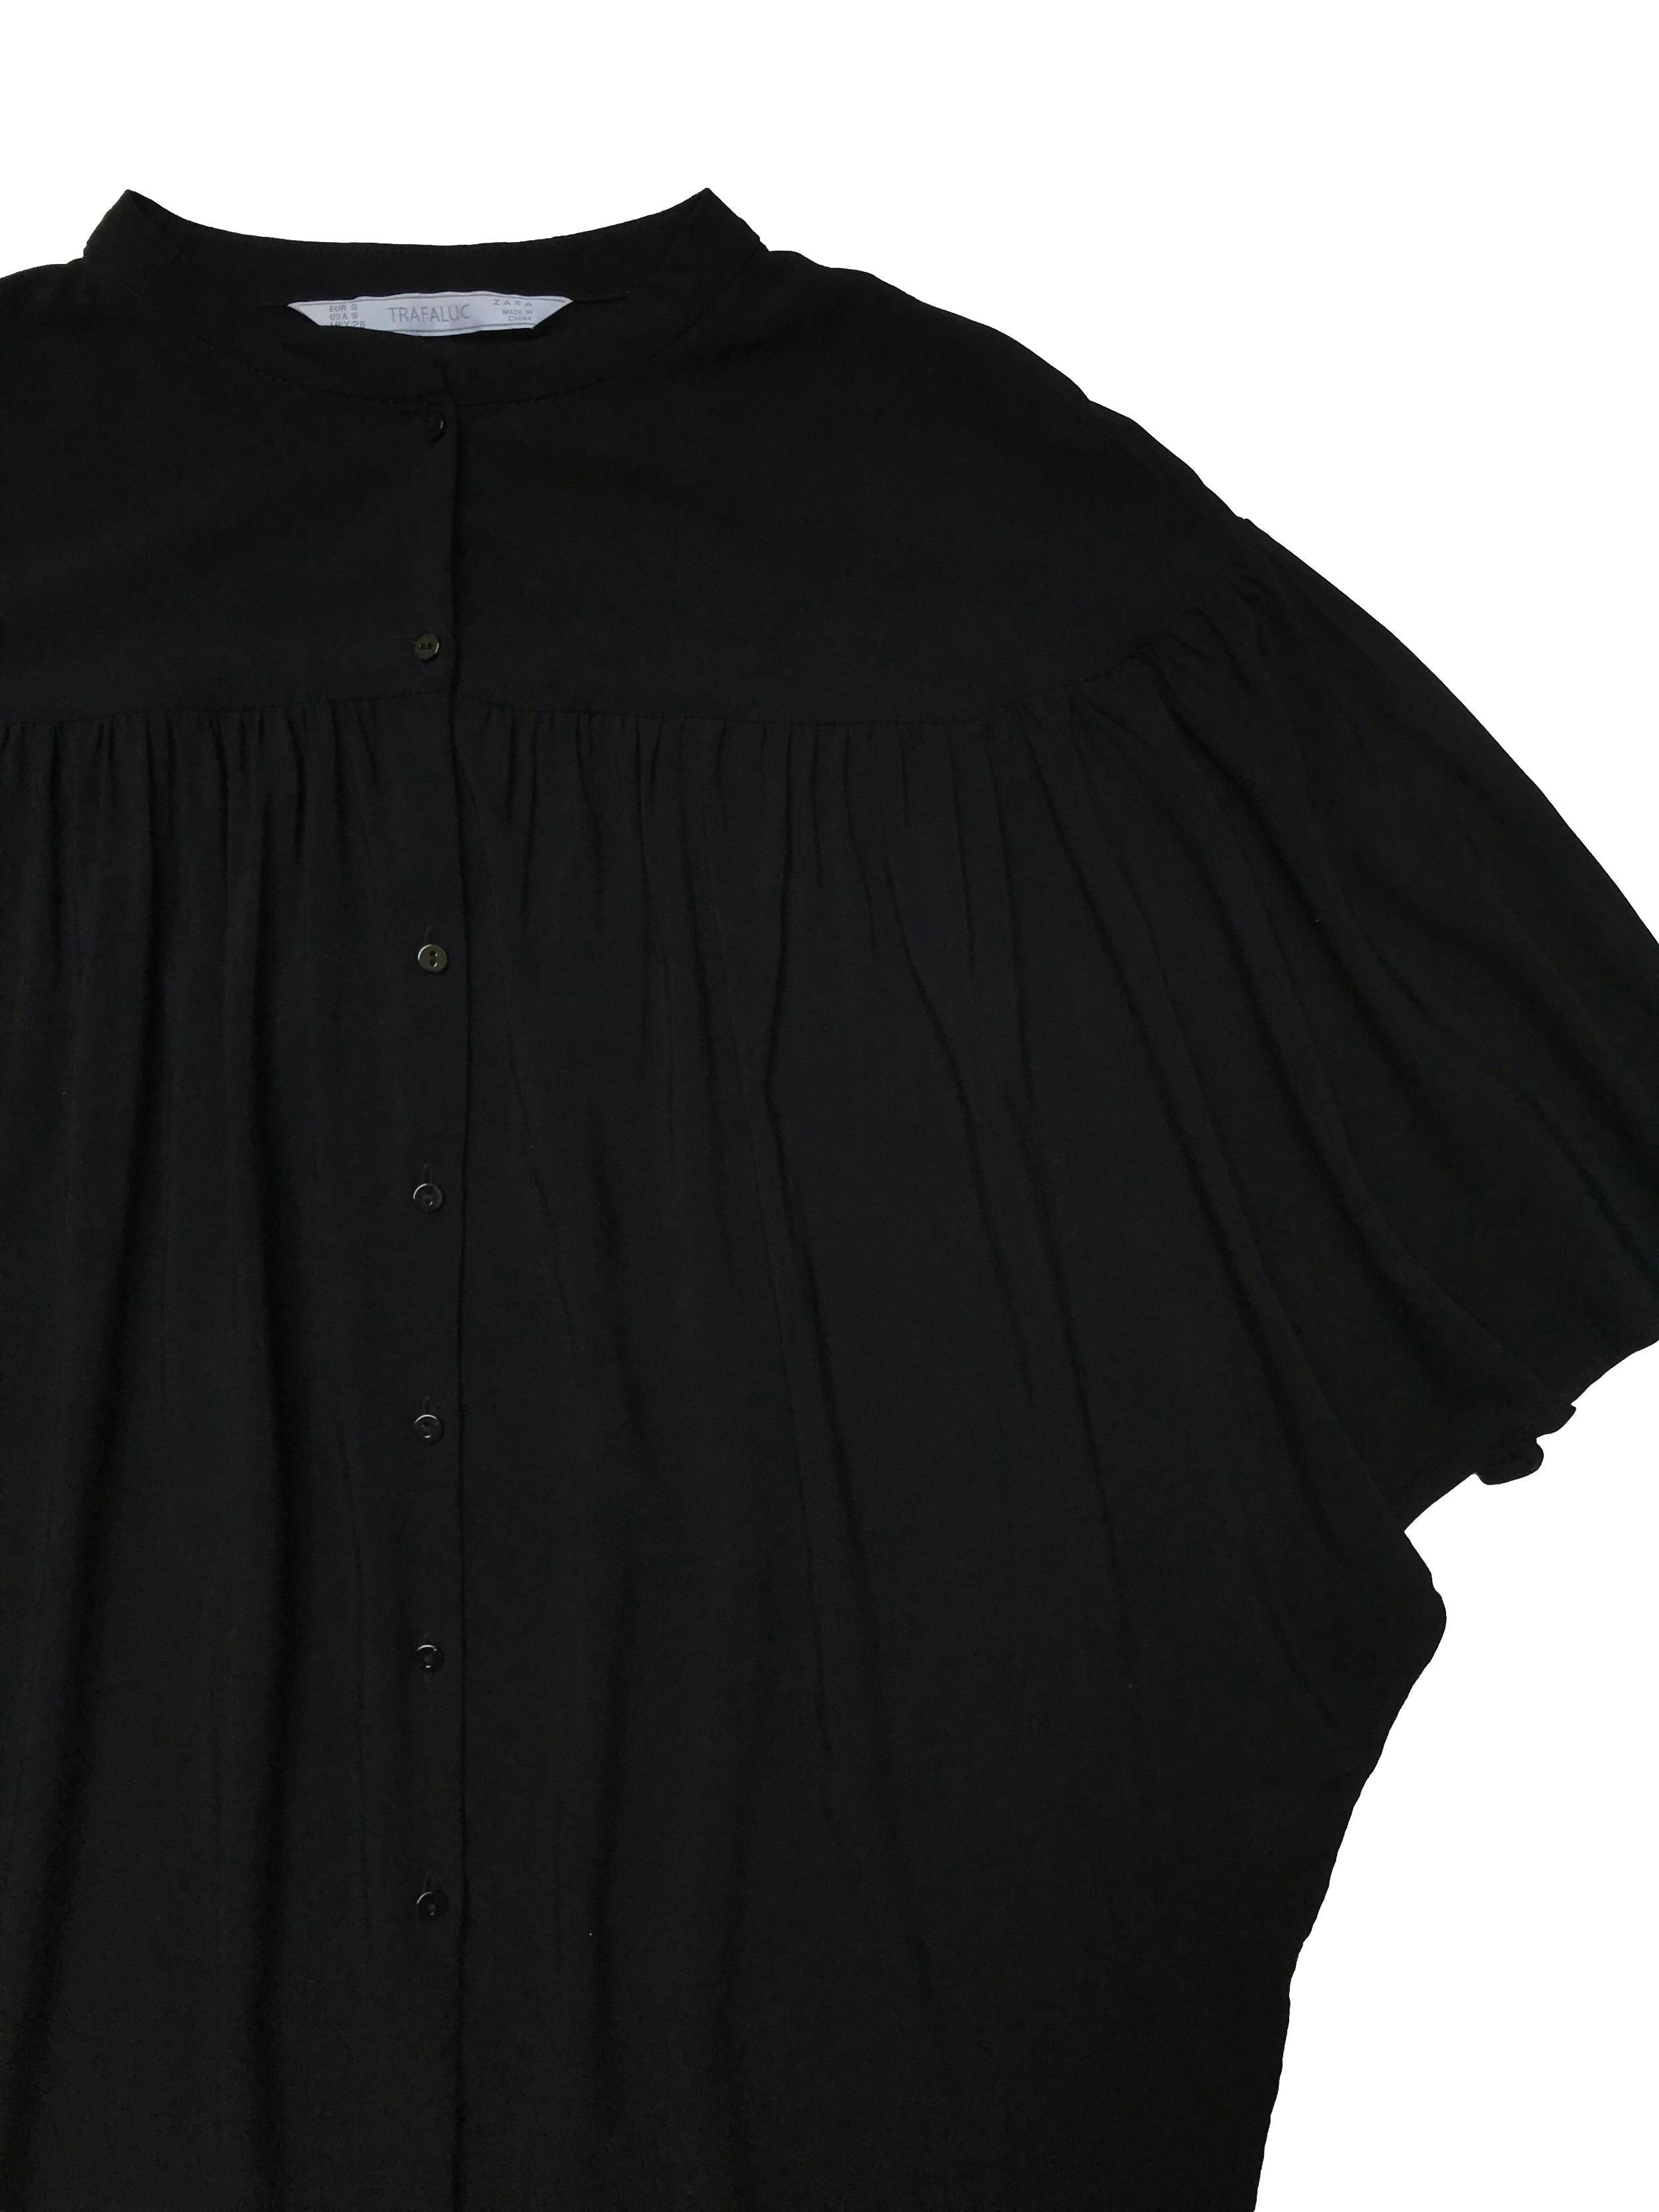 Blusa oversized Zara, tela chalis negra, mangas tipo murciélago, cuello nerú y fila de botones al centro. Ancho 140-100cm Largo 55cm